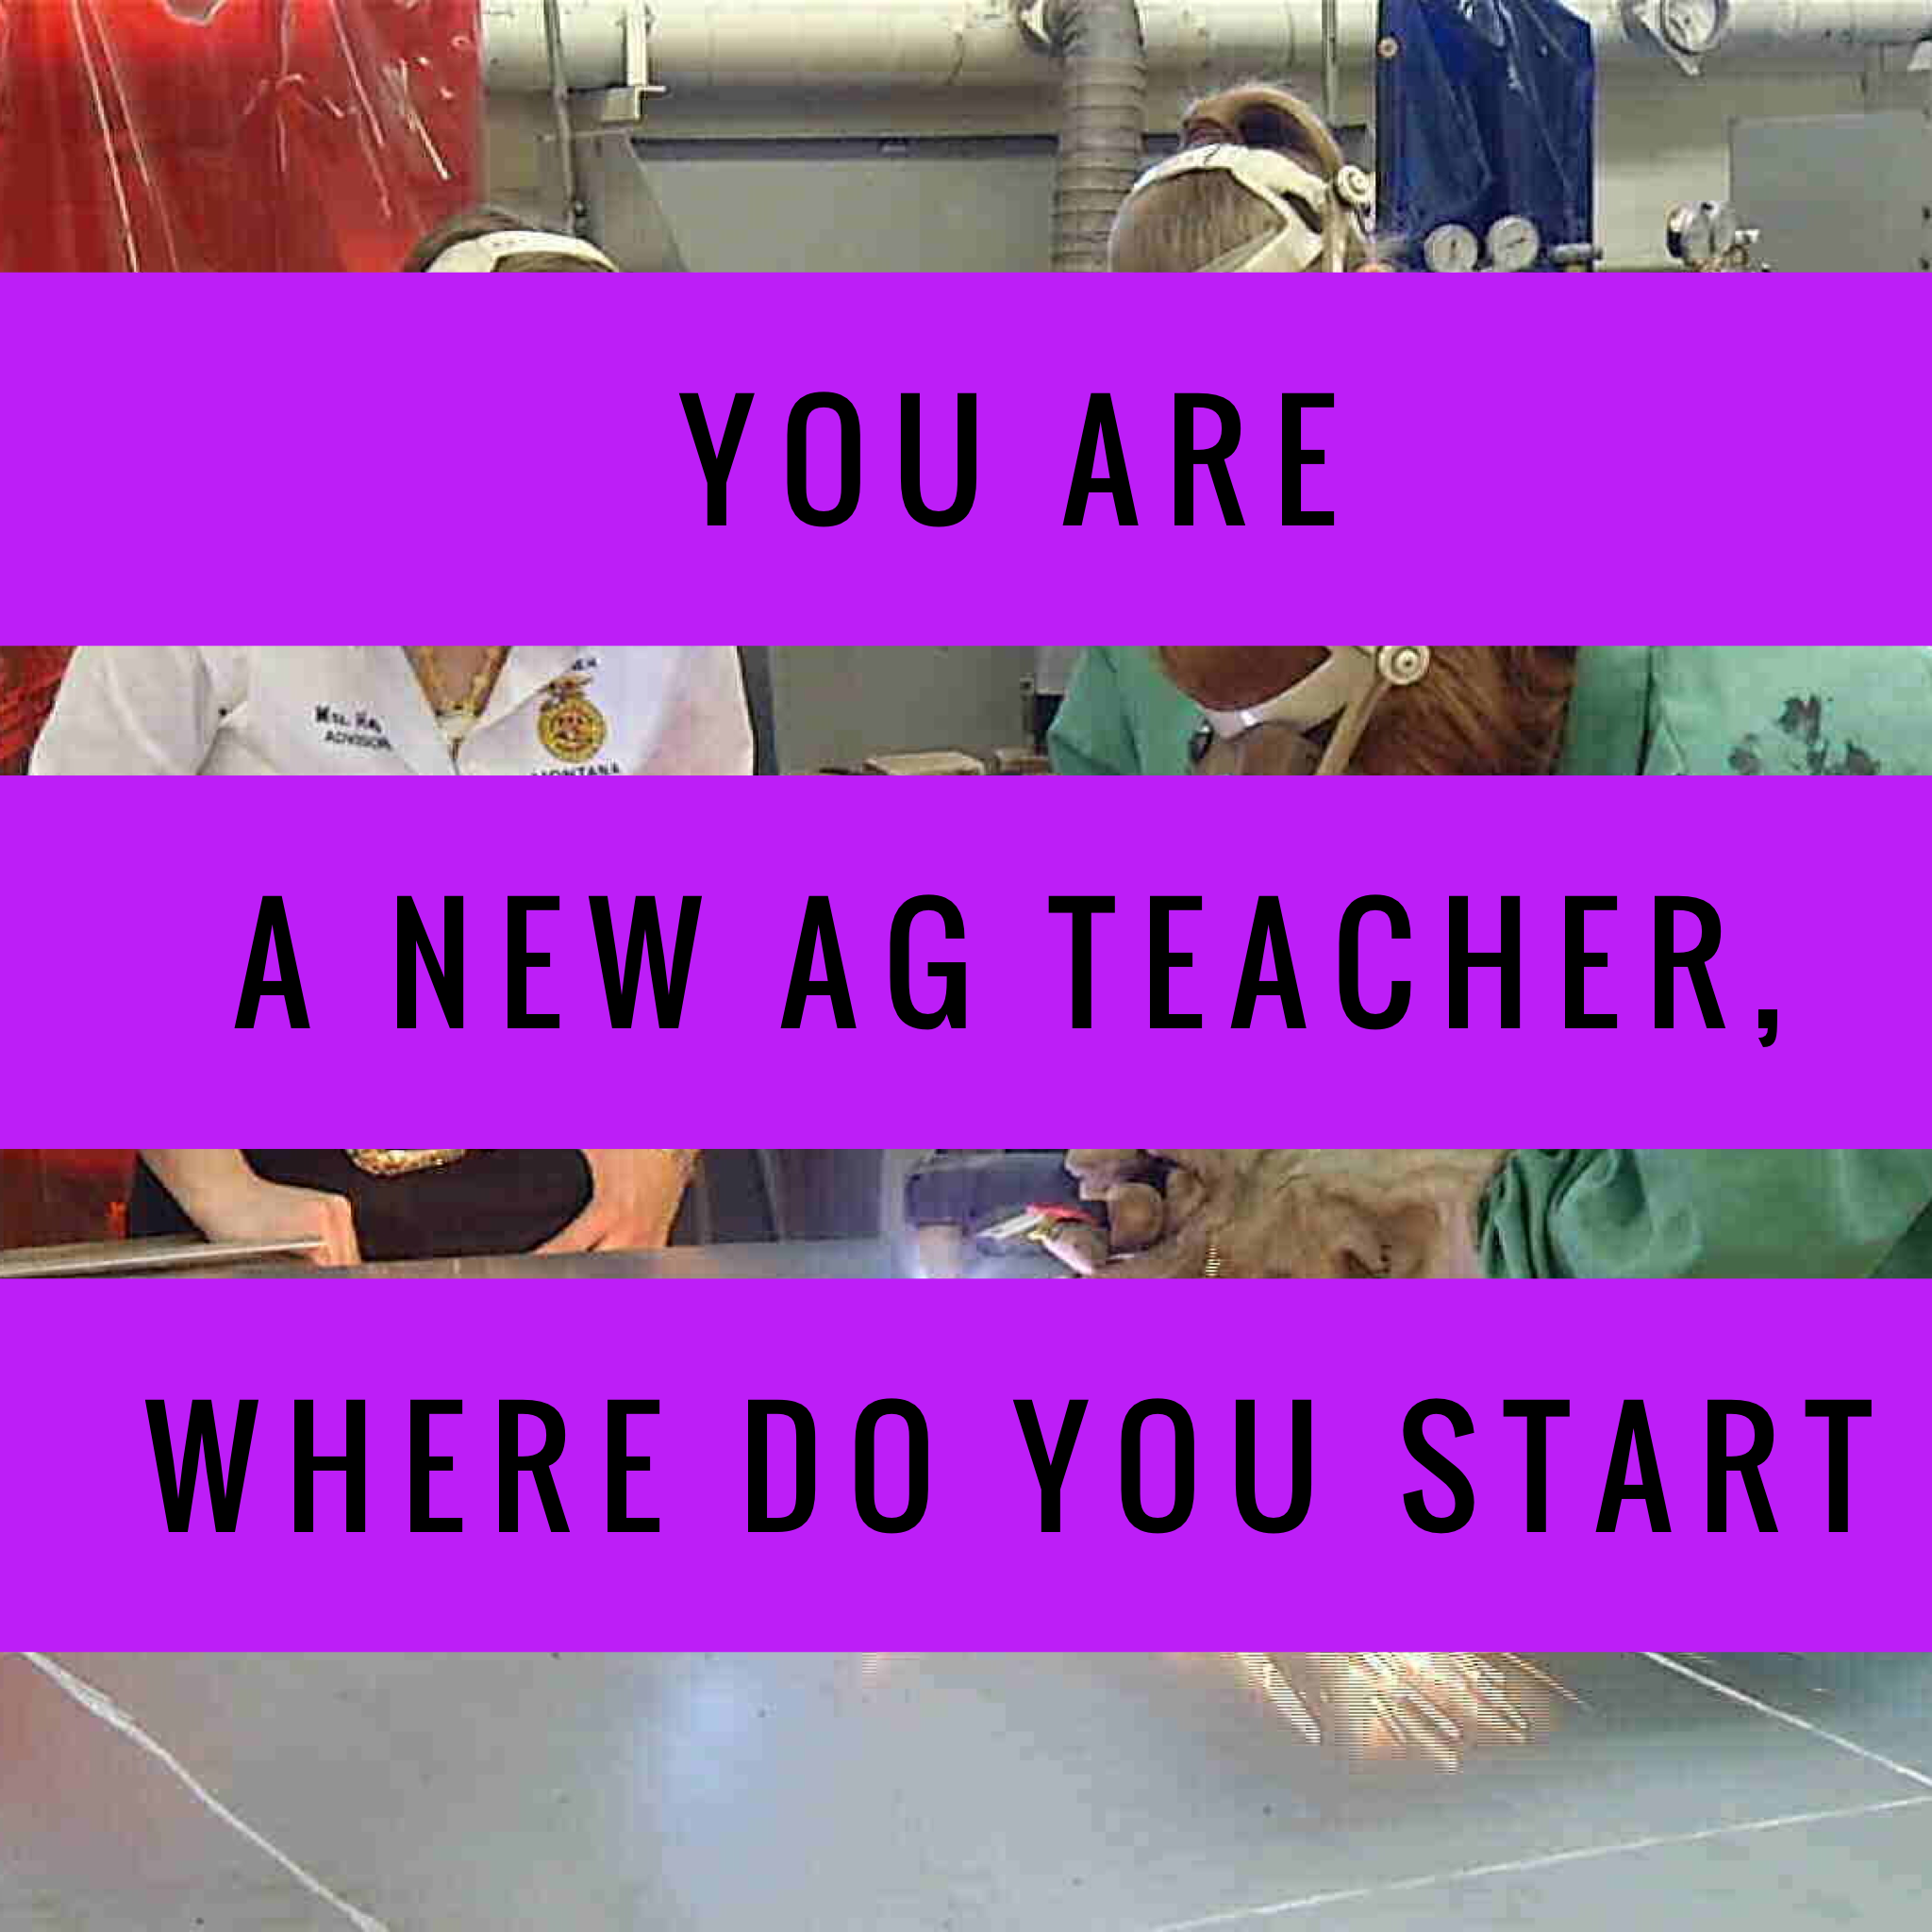 You Are a New Ag Teacher, Where Do You Start?